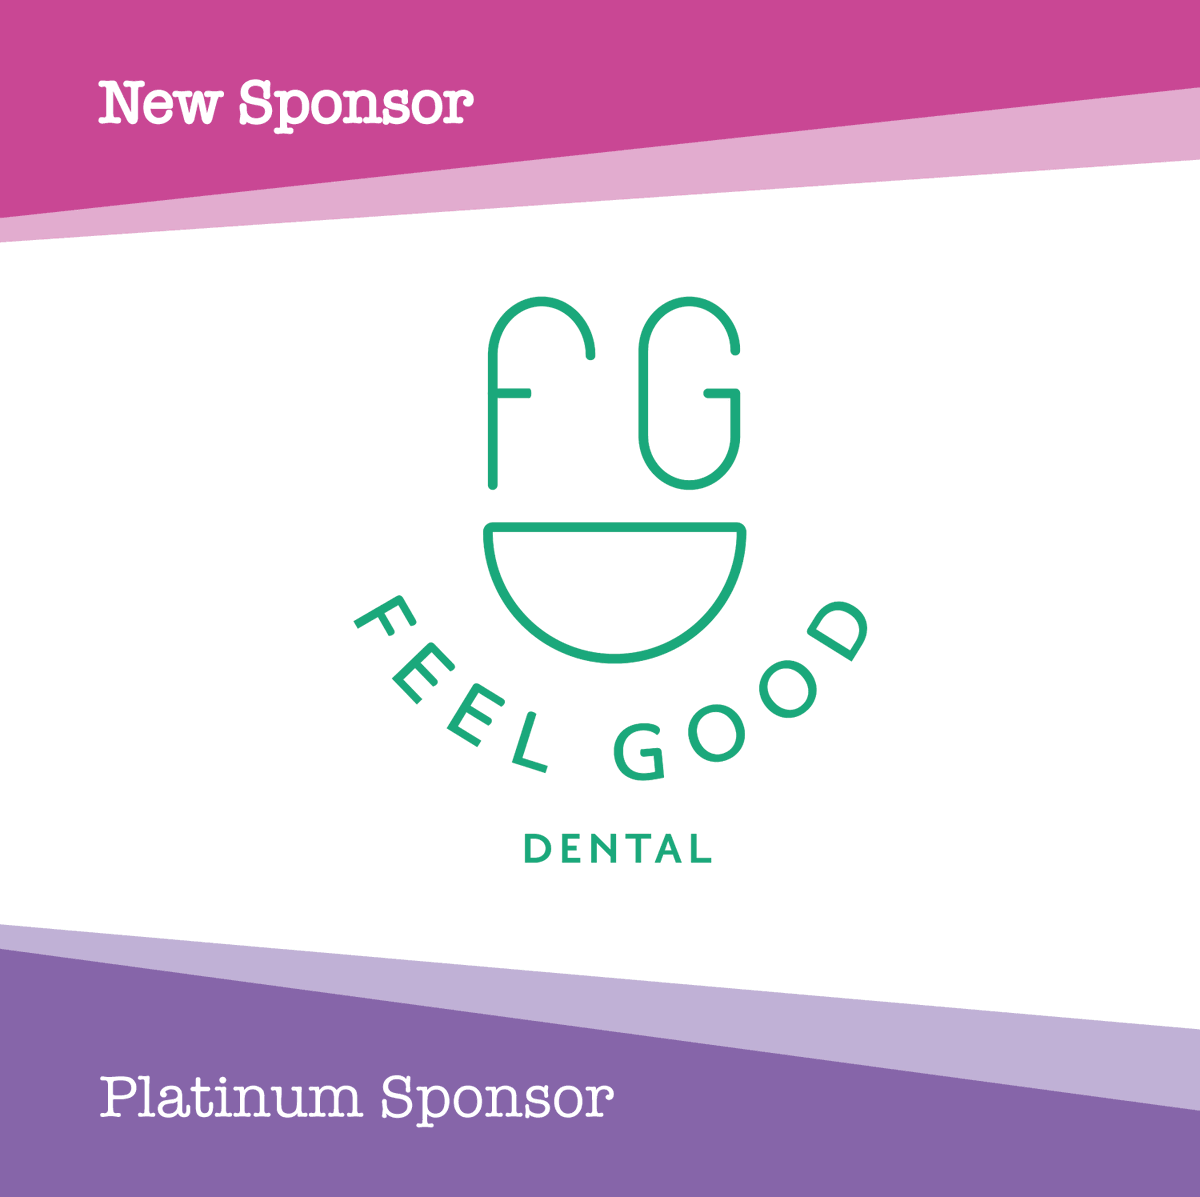 We are pleased to announce that Feel Good Dental is a platinum sponsor of SNCFest2024!

feelgooddental.co.uk

#SNCFest2024 #CraftsFestival #ArtsFestival #MusicFestival #SE25 #SouthNorwood #Croydon #CroydonFestival #FestivalCroydon #ThisIsCroydon #FestivalLondon #LondonFestival